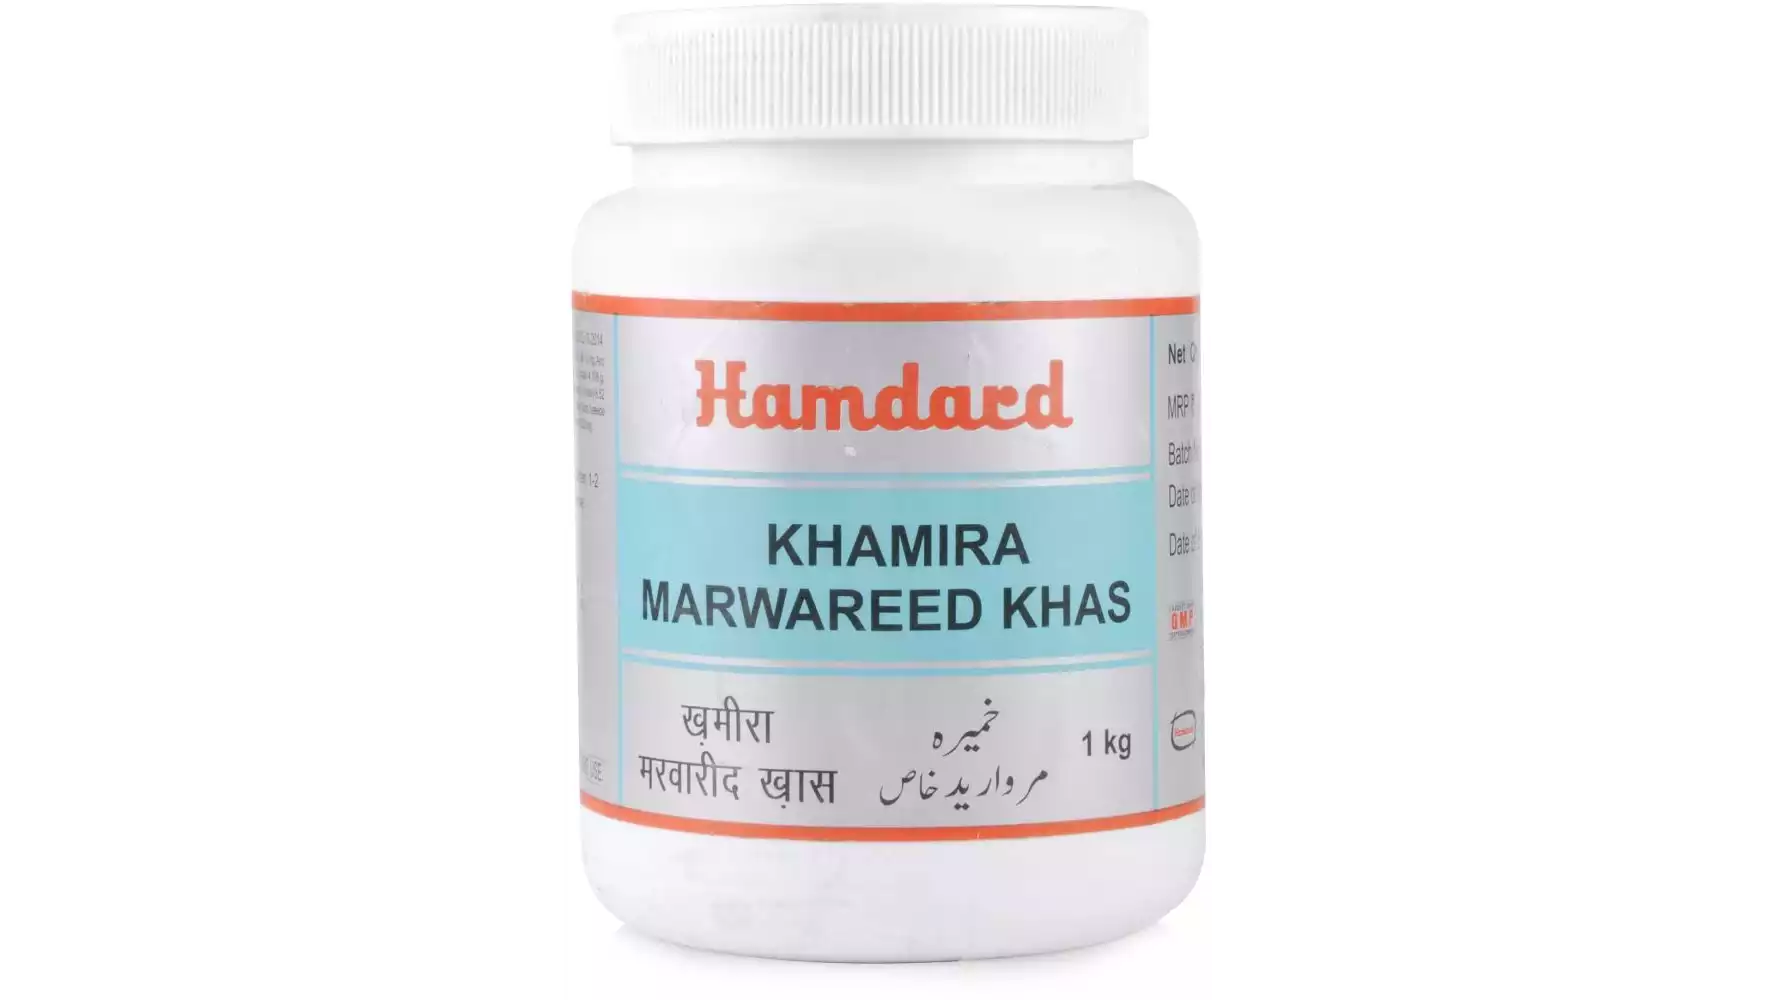 Hamdard Khamira Marwareed Khas (1kg)